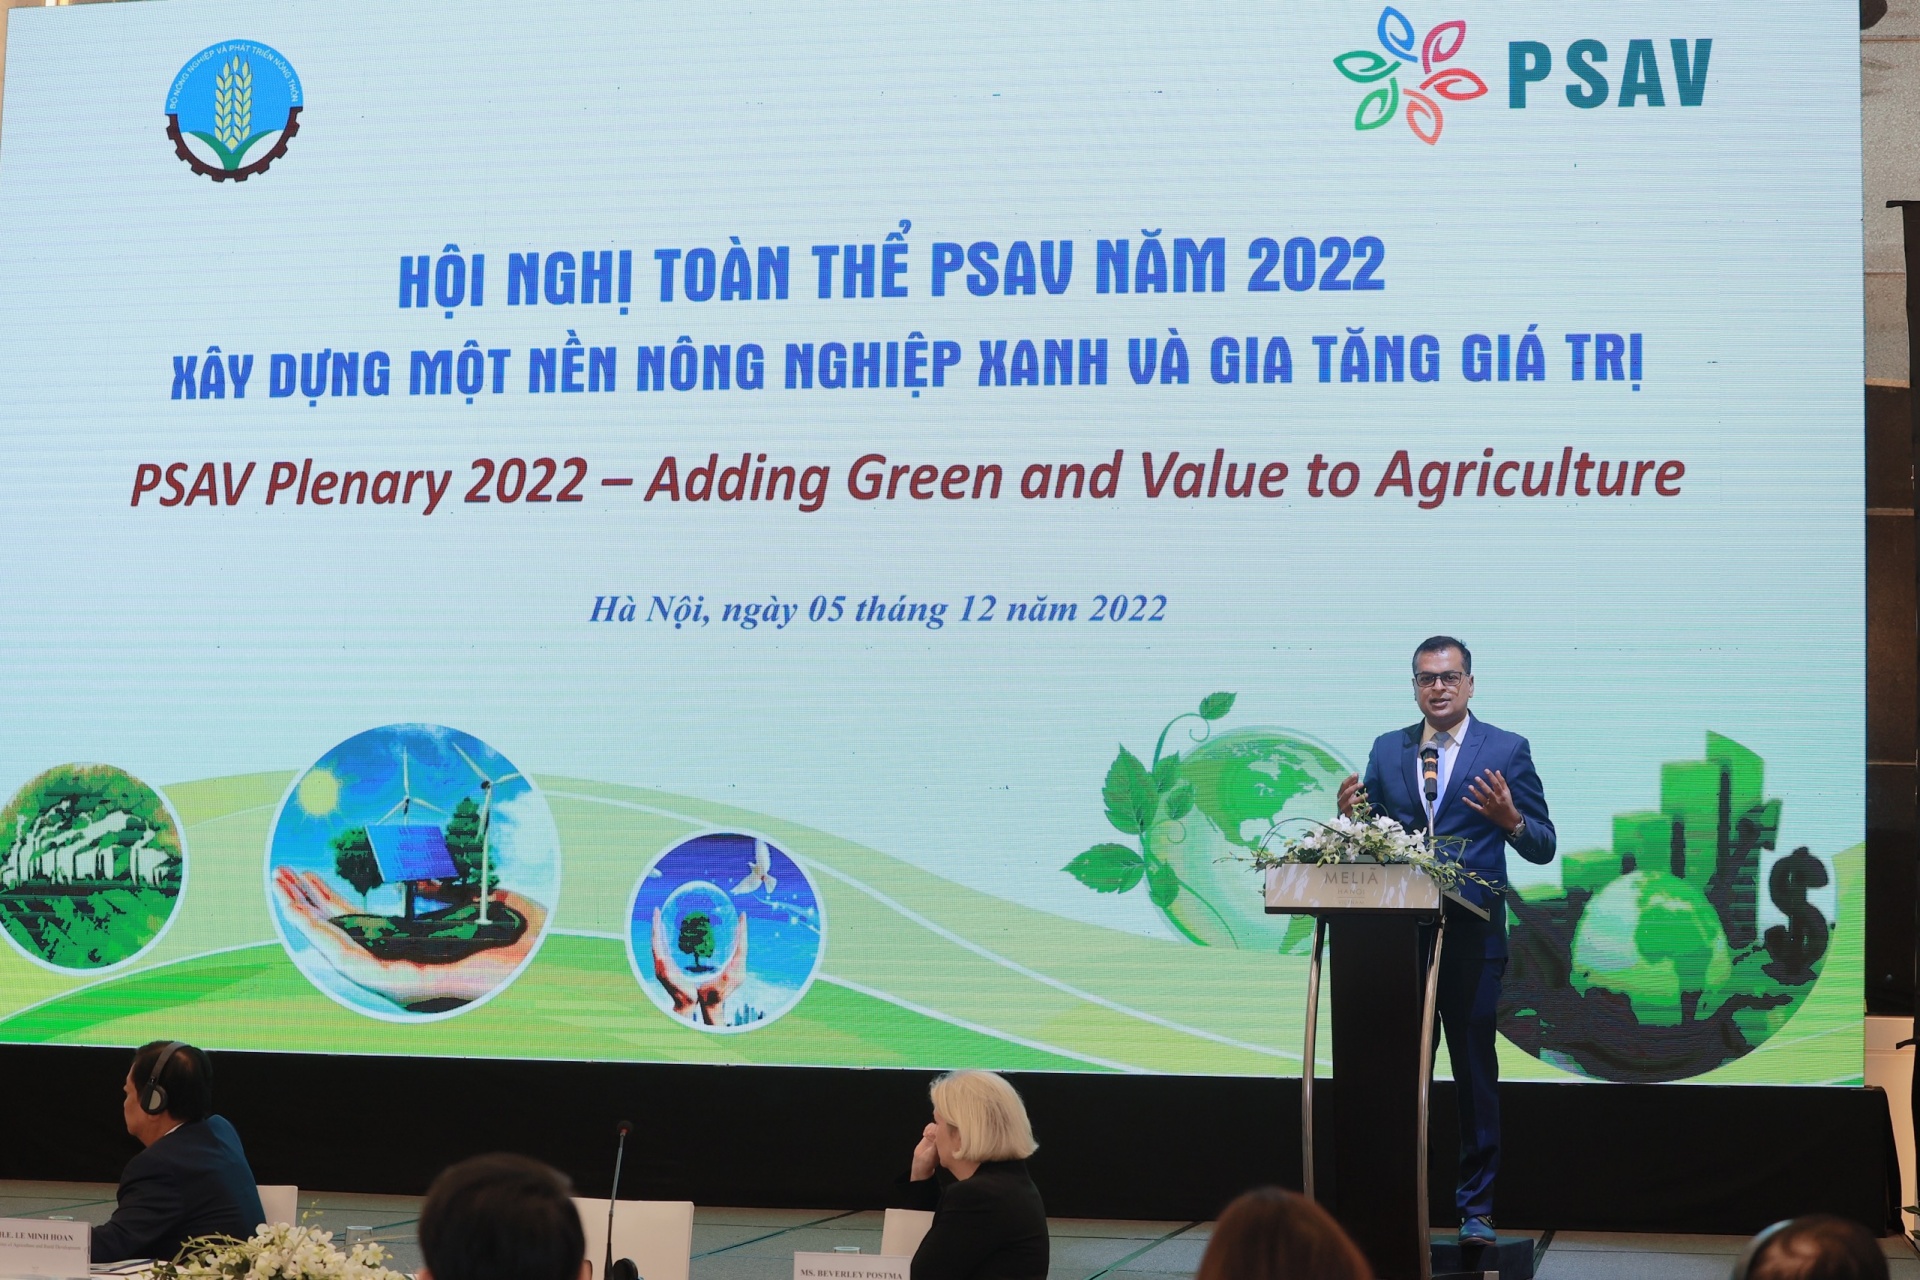 nestle vietnam enters multi stakeholder partnerships in green agriculture